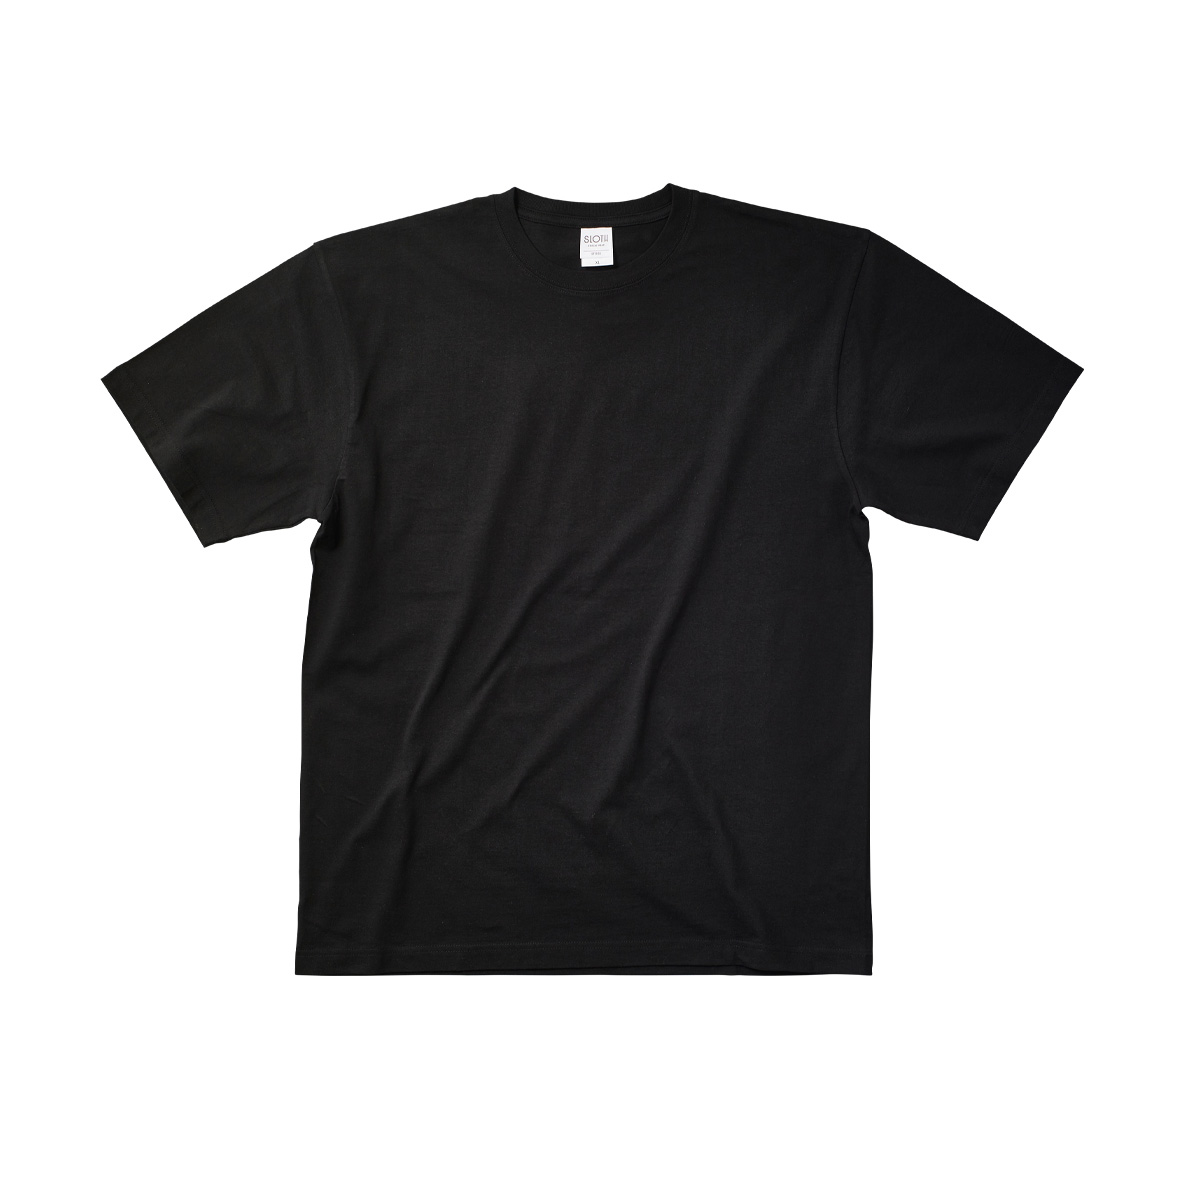 SLOTH スロス オーガニックコットンTシャツ (品番ST1103)